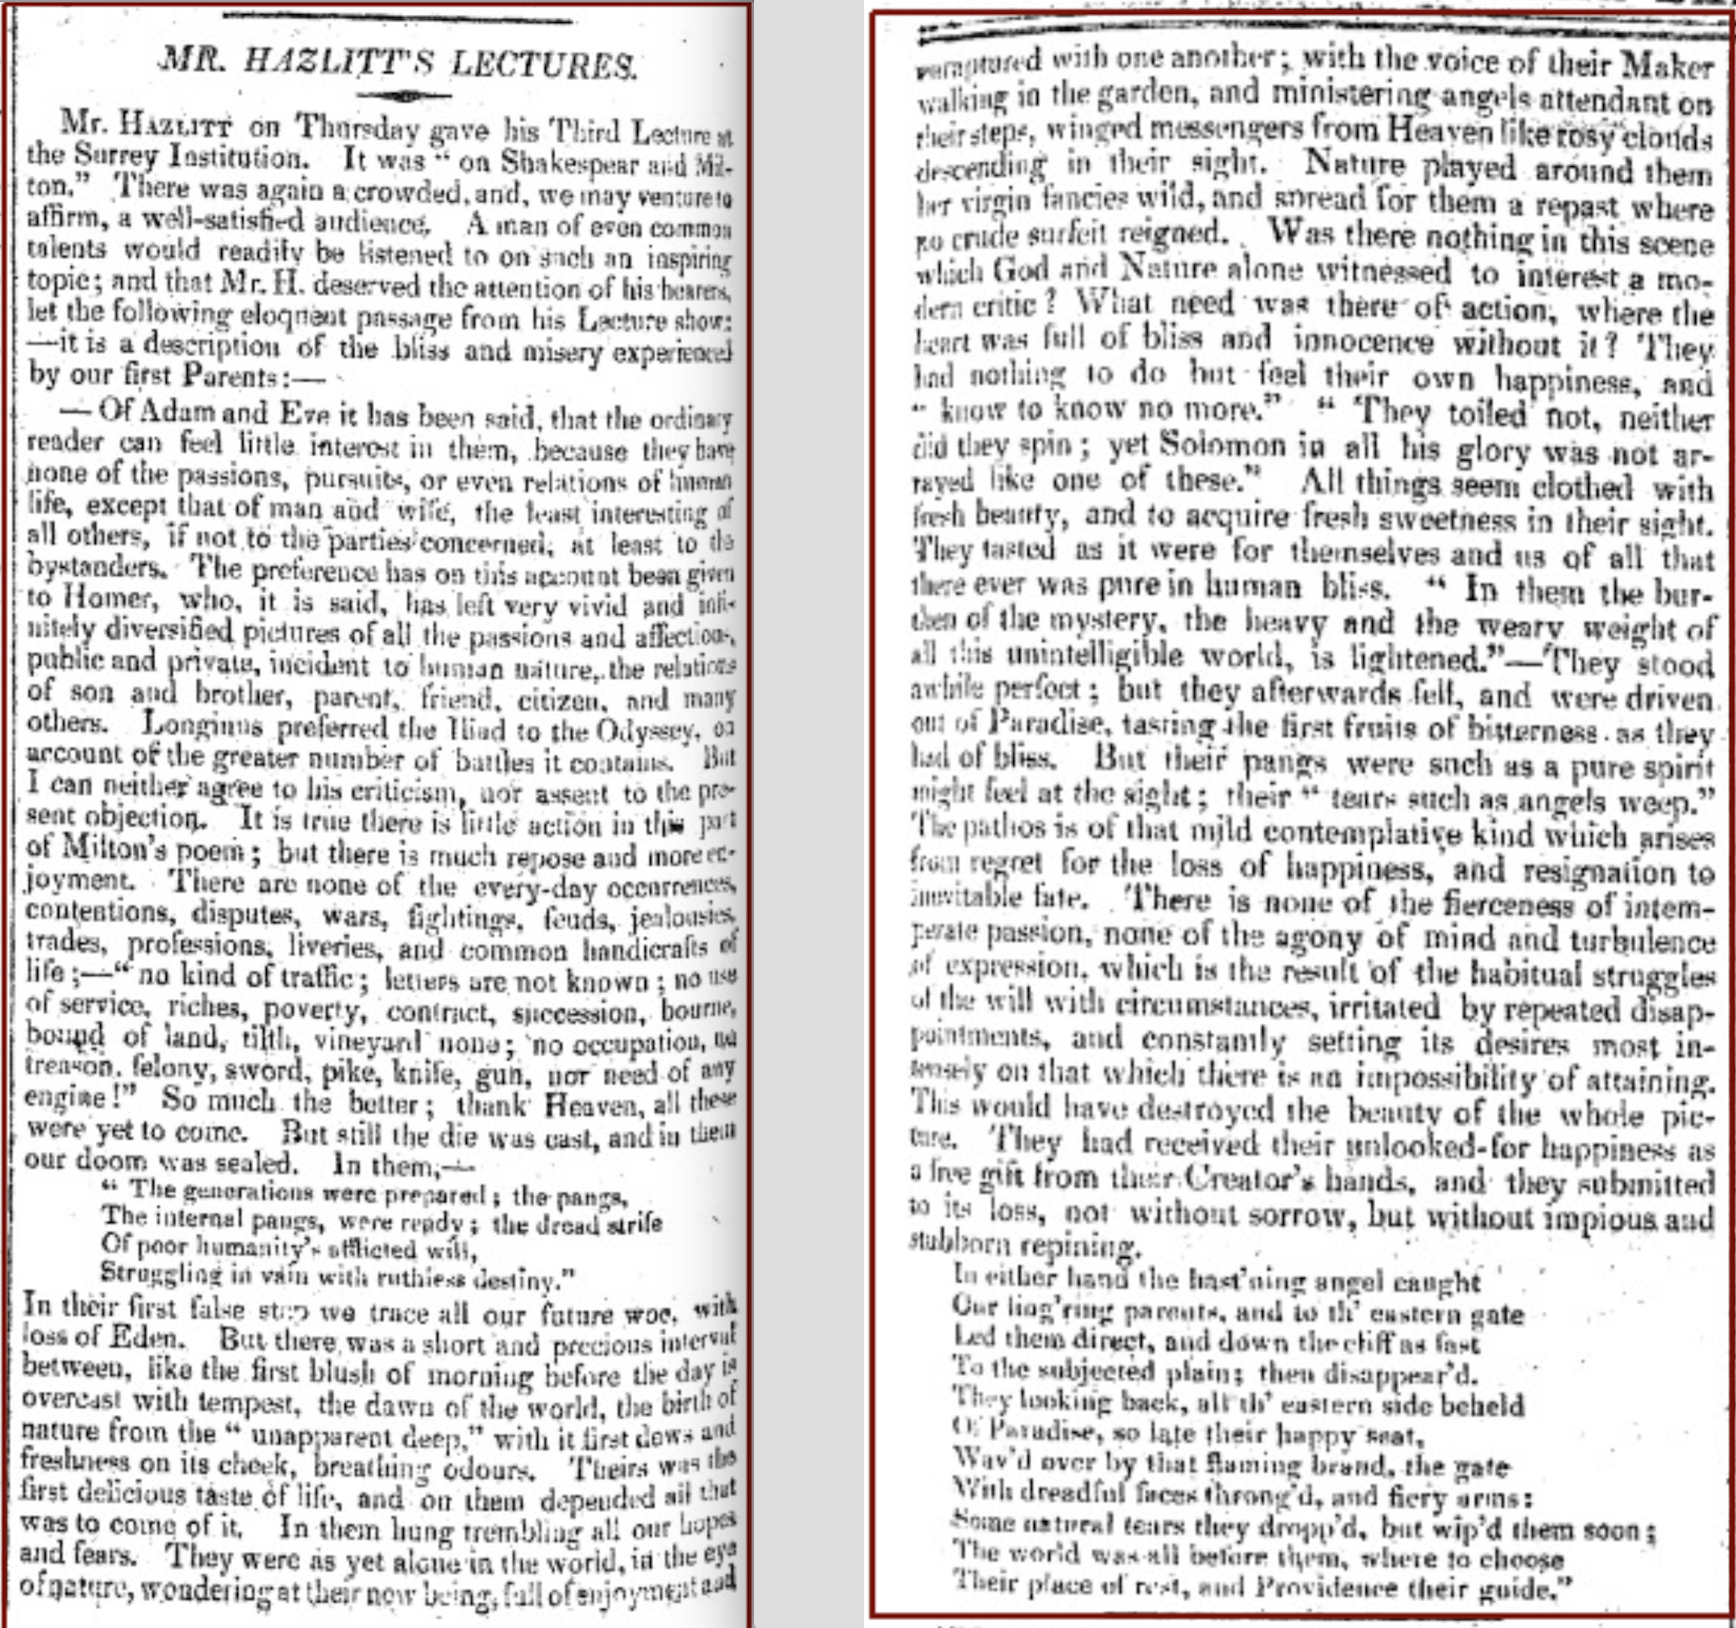 Mr. Hazlitt’s Lectures, The Examiner, 1 Feb 1818, pp.76-77